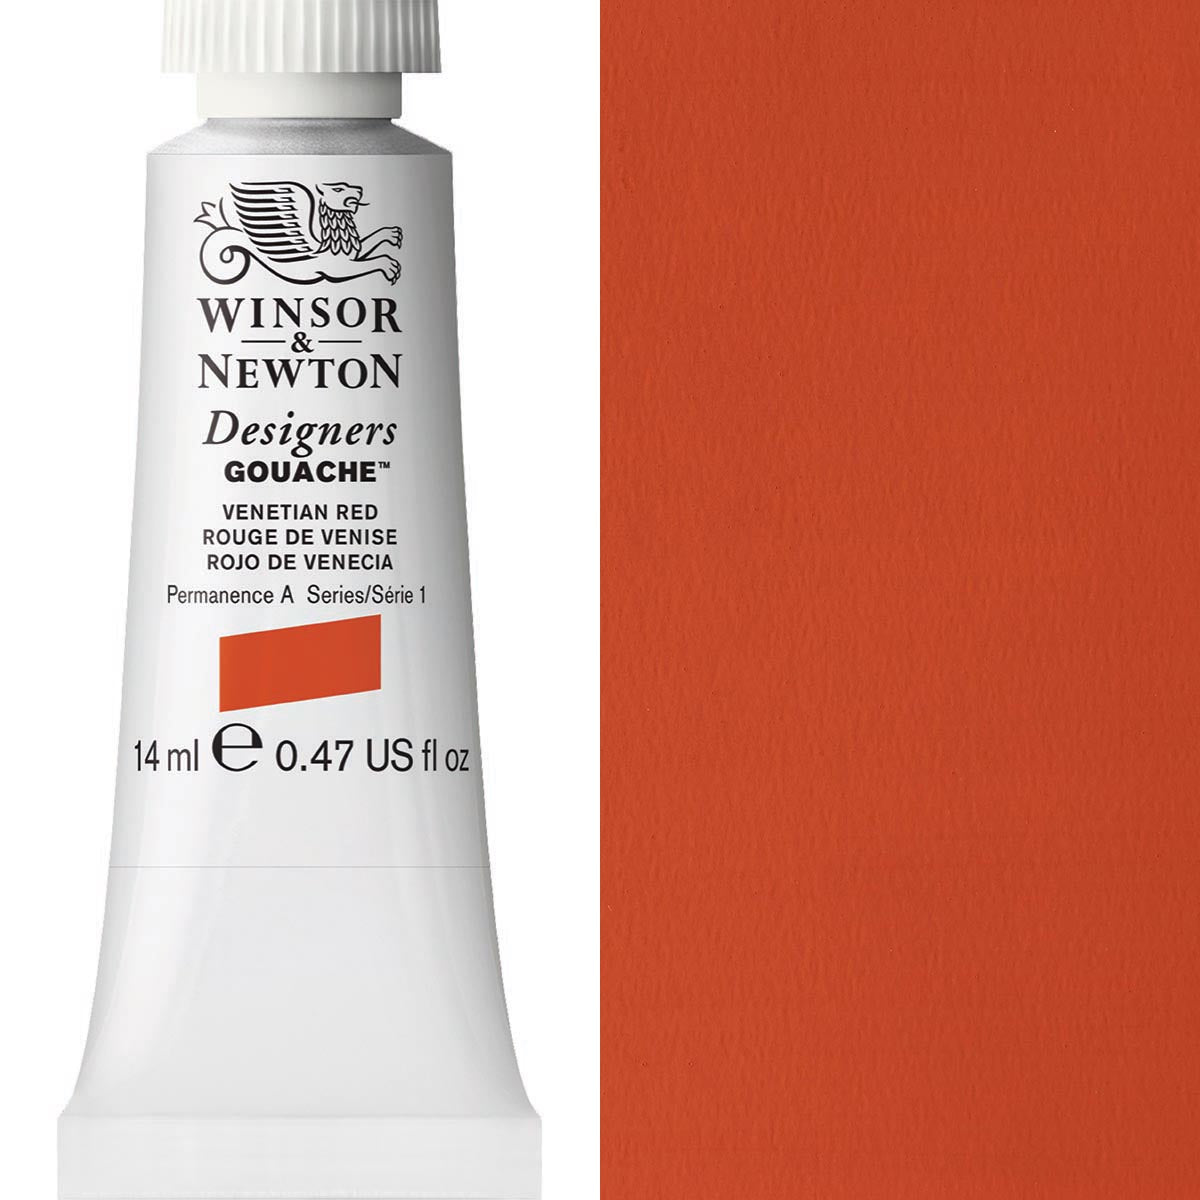 Winsor and Newton - Designers Gouache - 14ml - Venetian Red